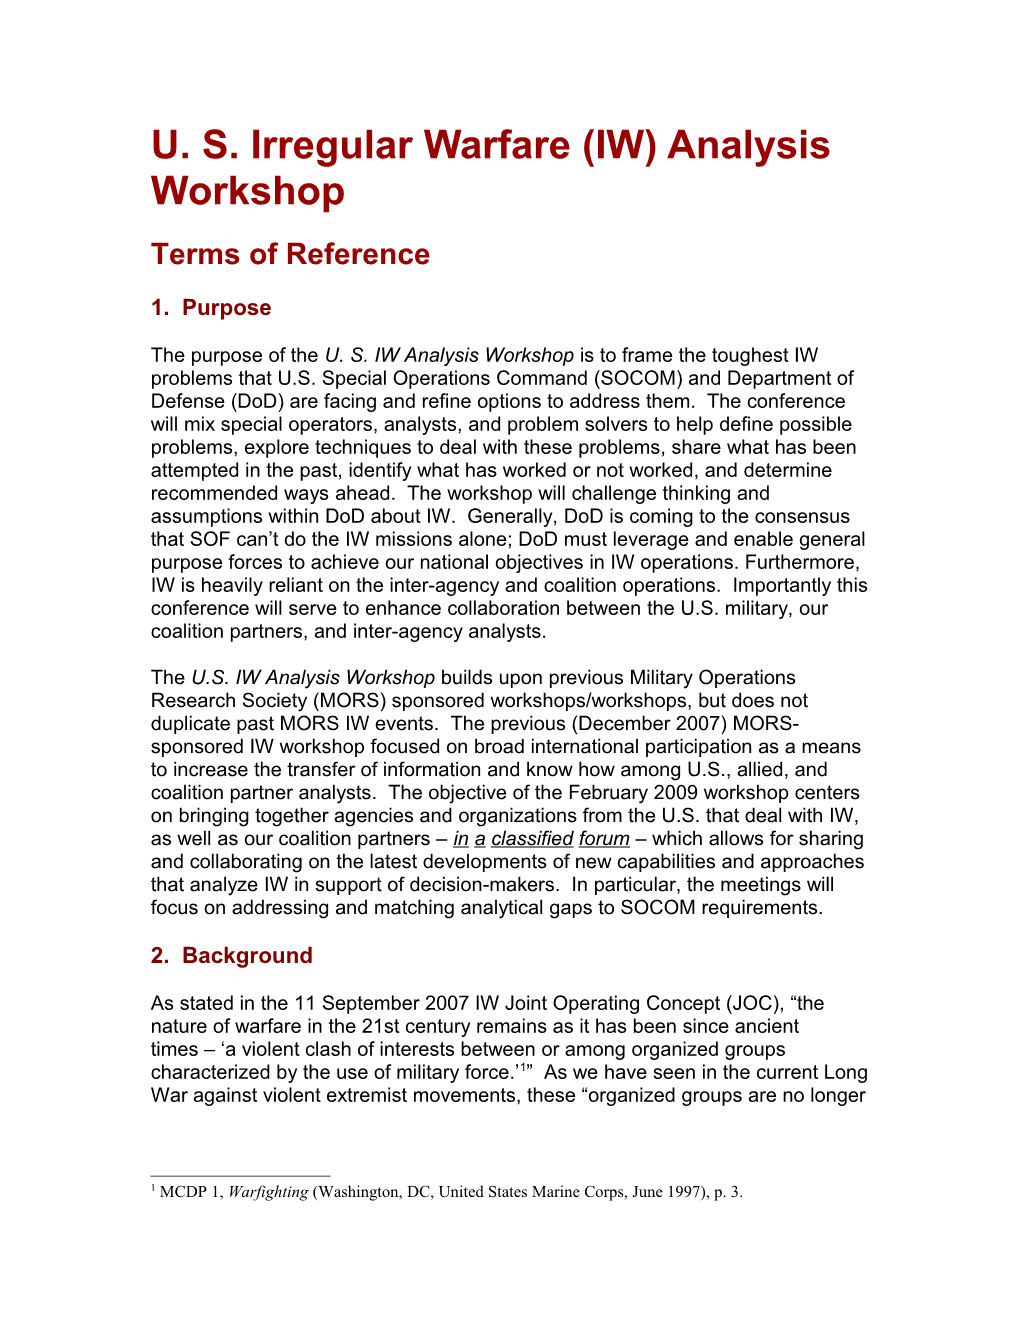 U. S. Irregular Warfare (IW) Analysis Workshop